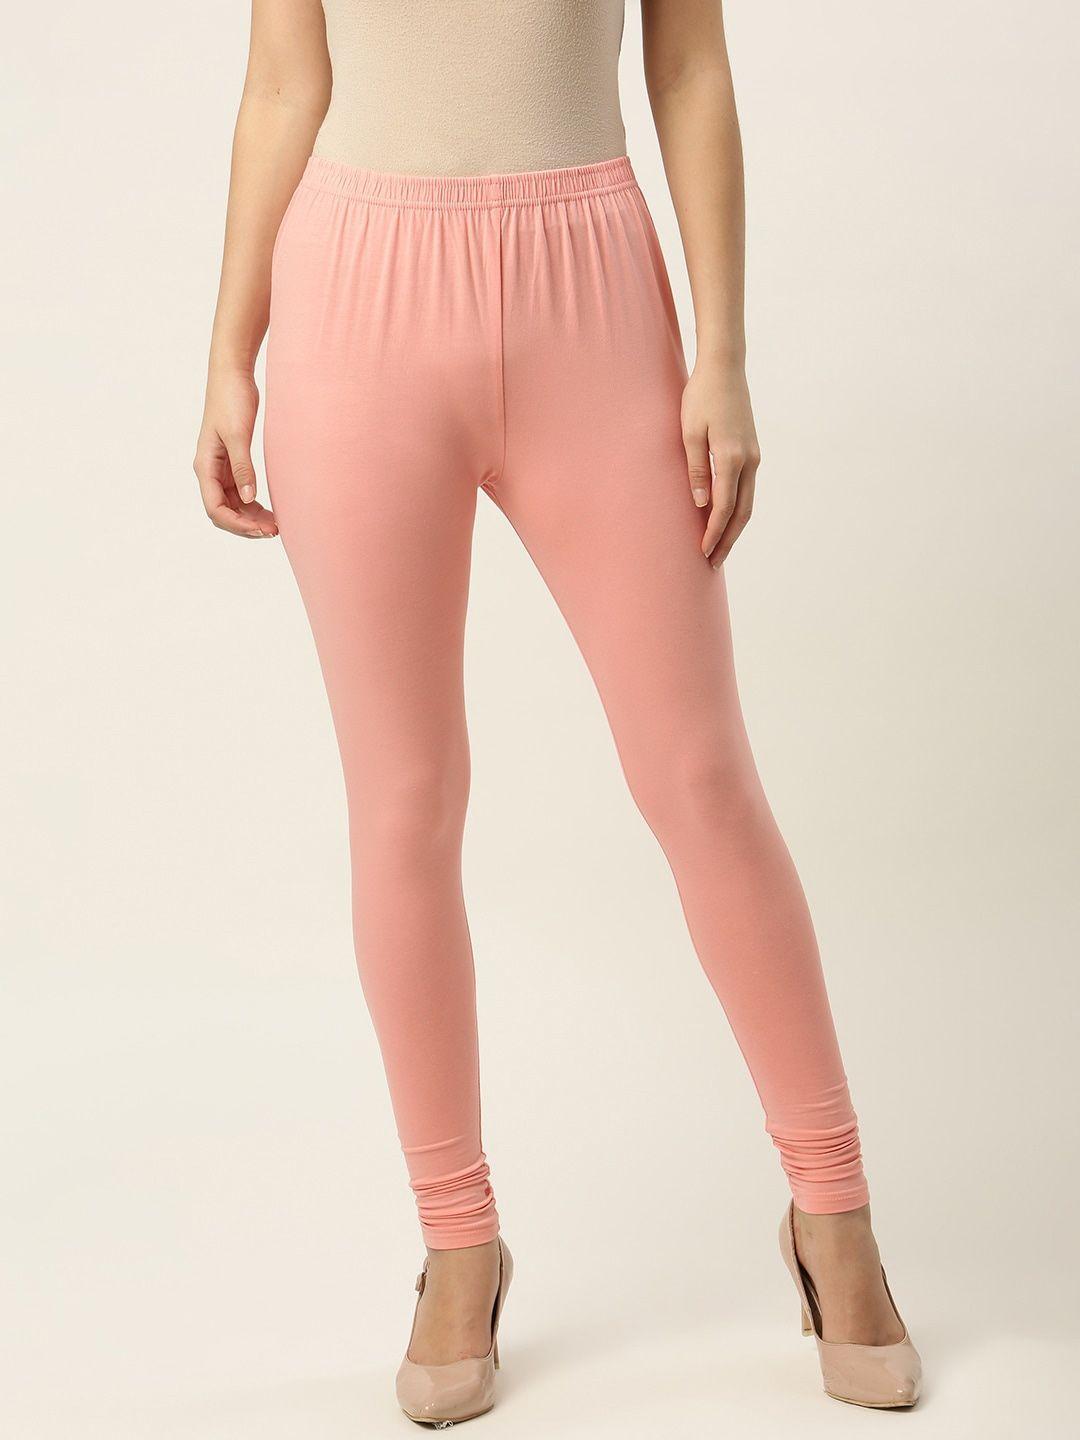 hasri women peach coloured solid churidar length leggings